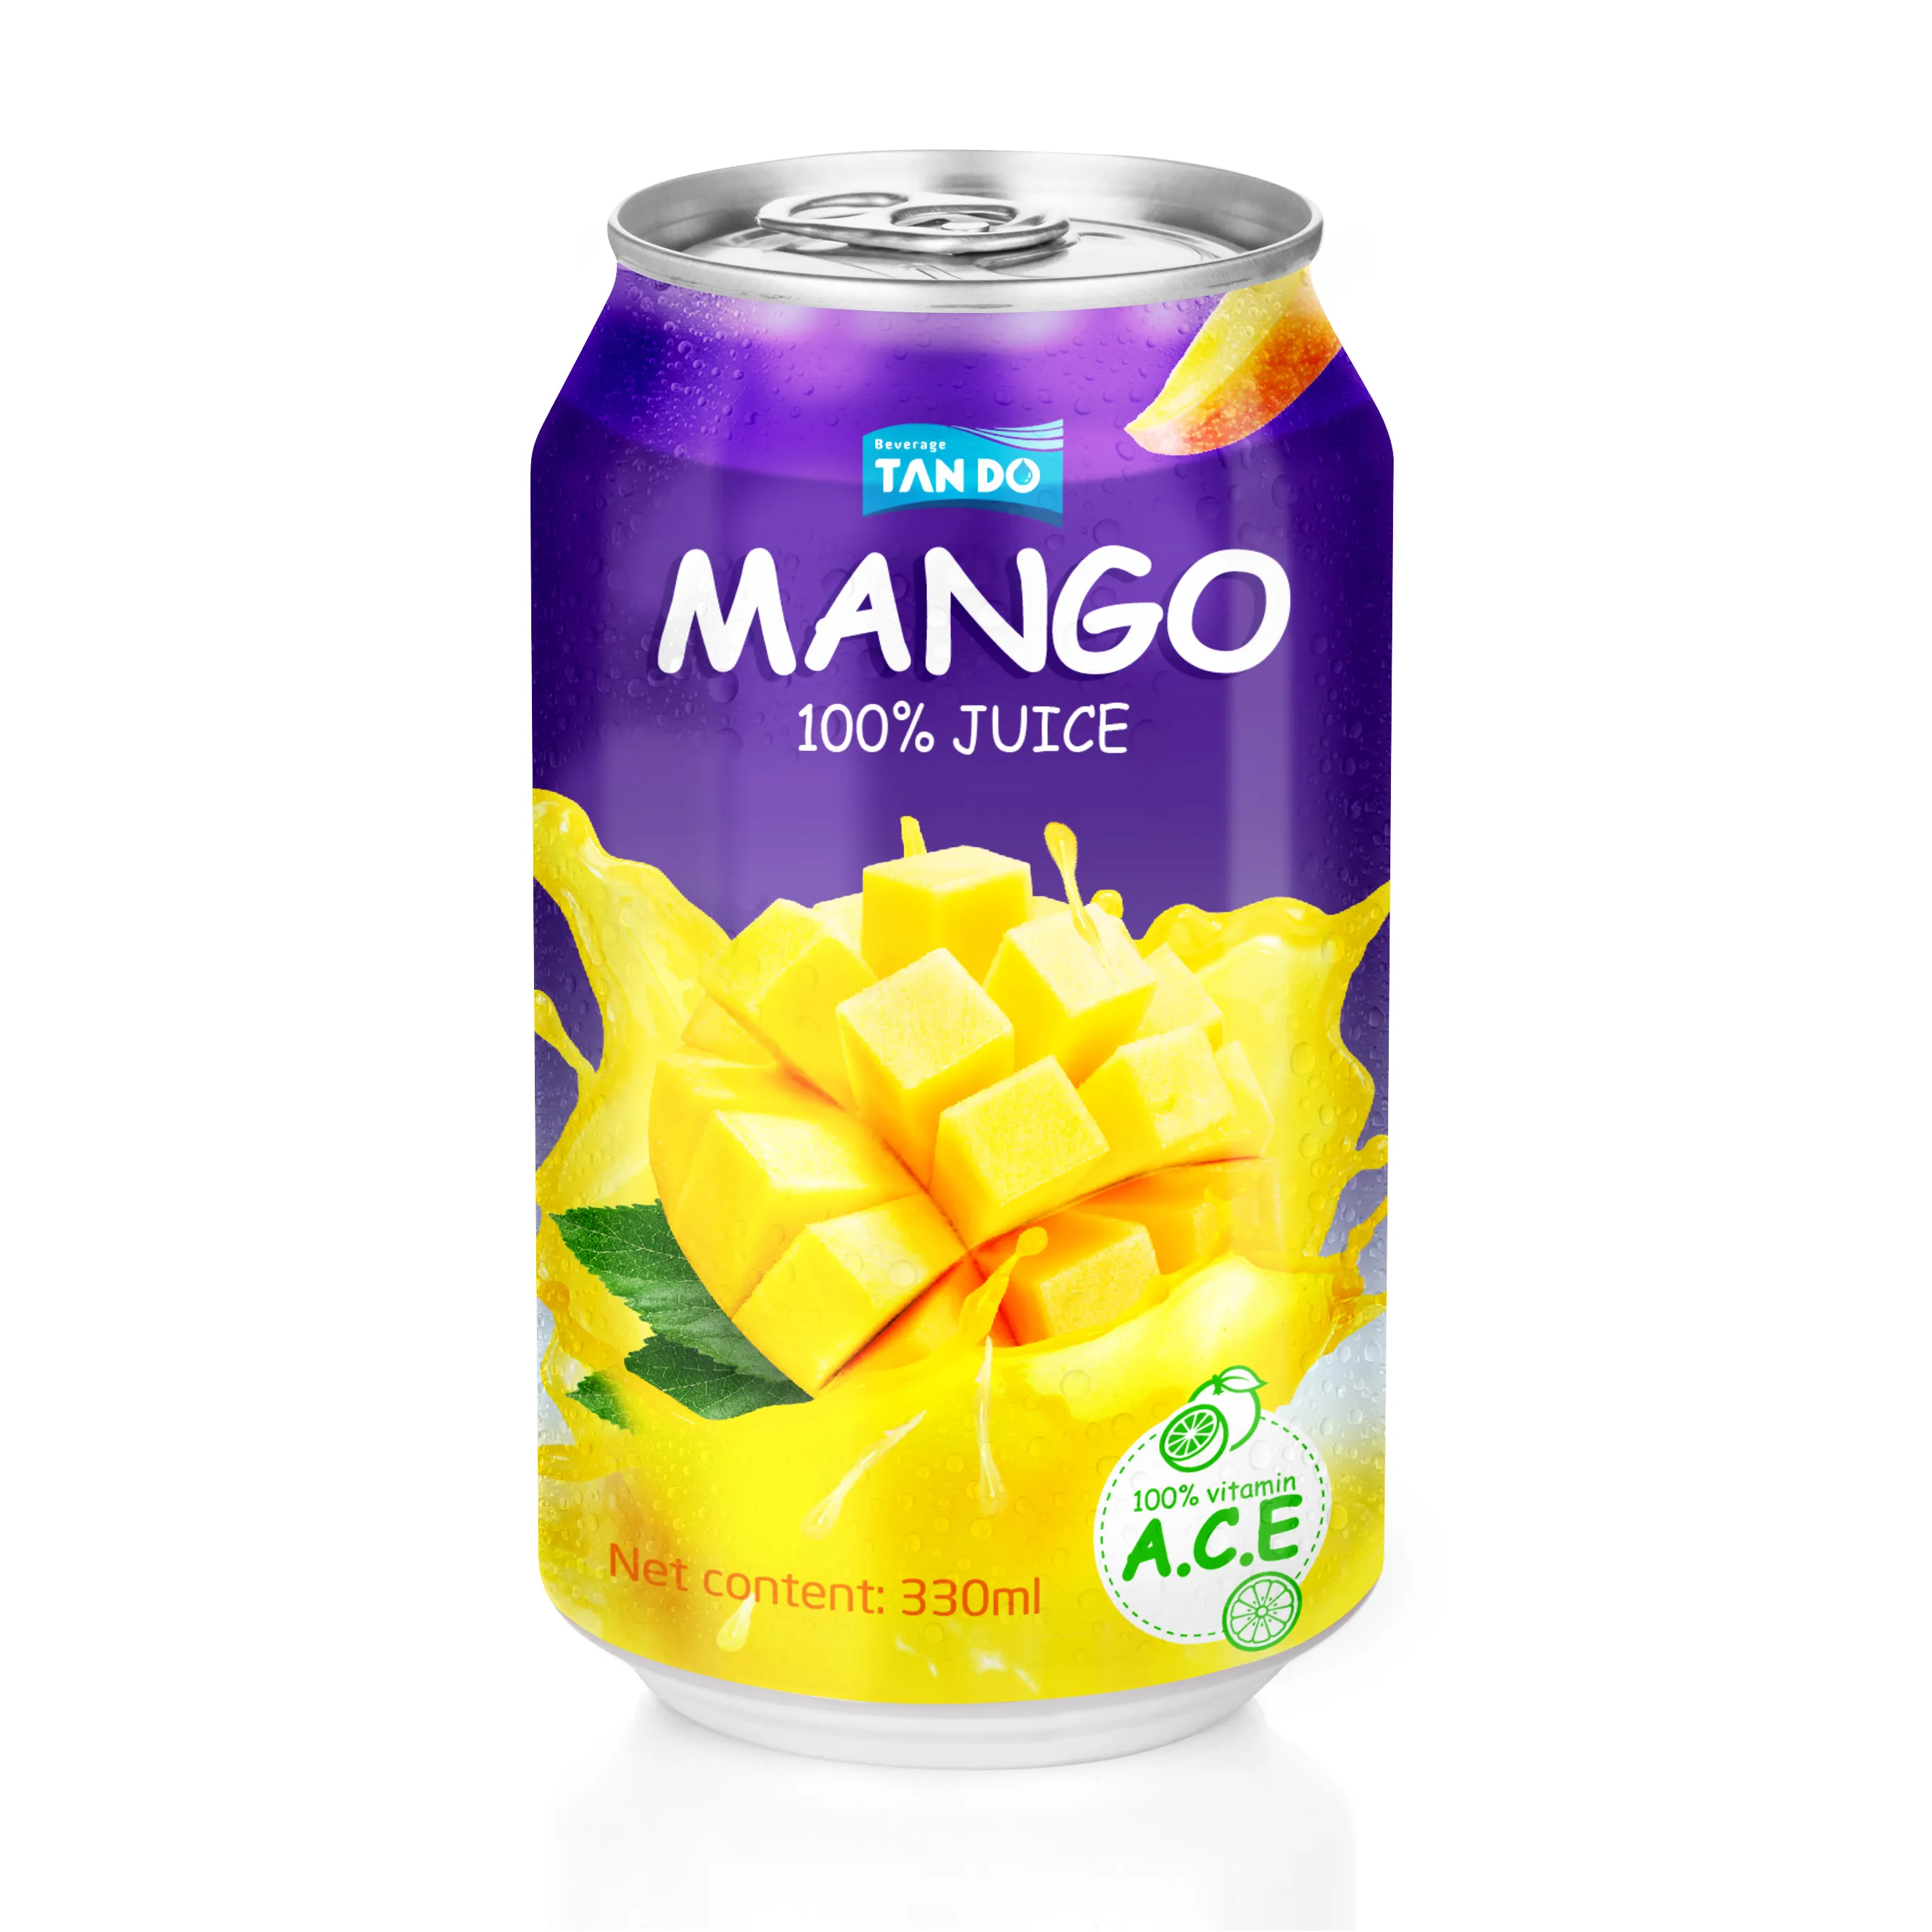 Private Label Vietnam Tropical Fruit Juice Drink: Mango, Sugarcane, Mangosteen, Soursop or others- Free sample - Free design